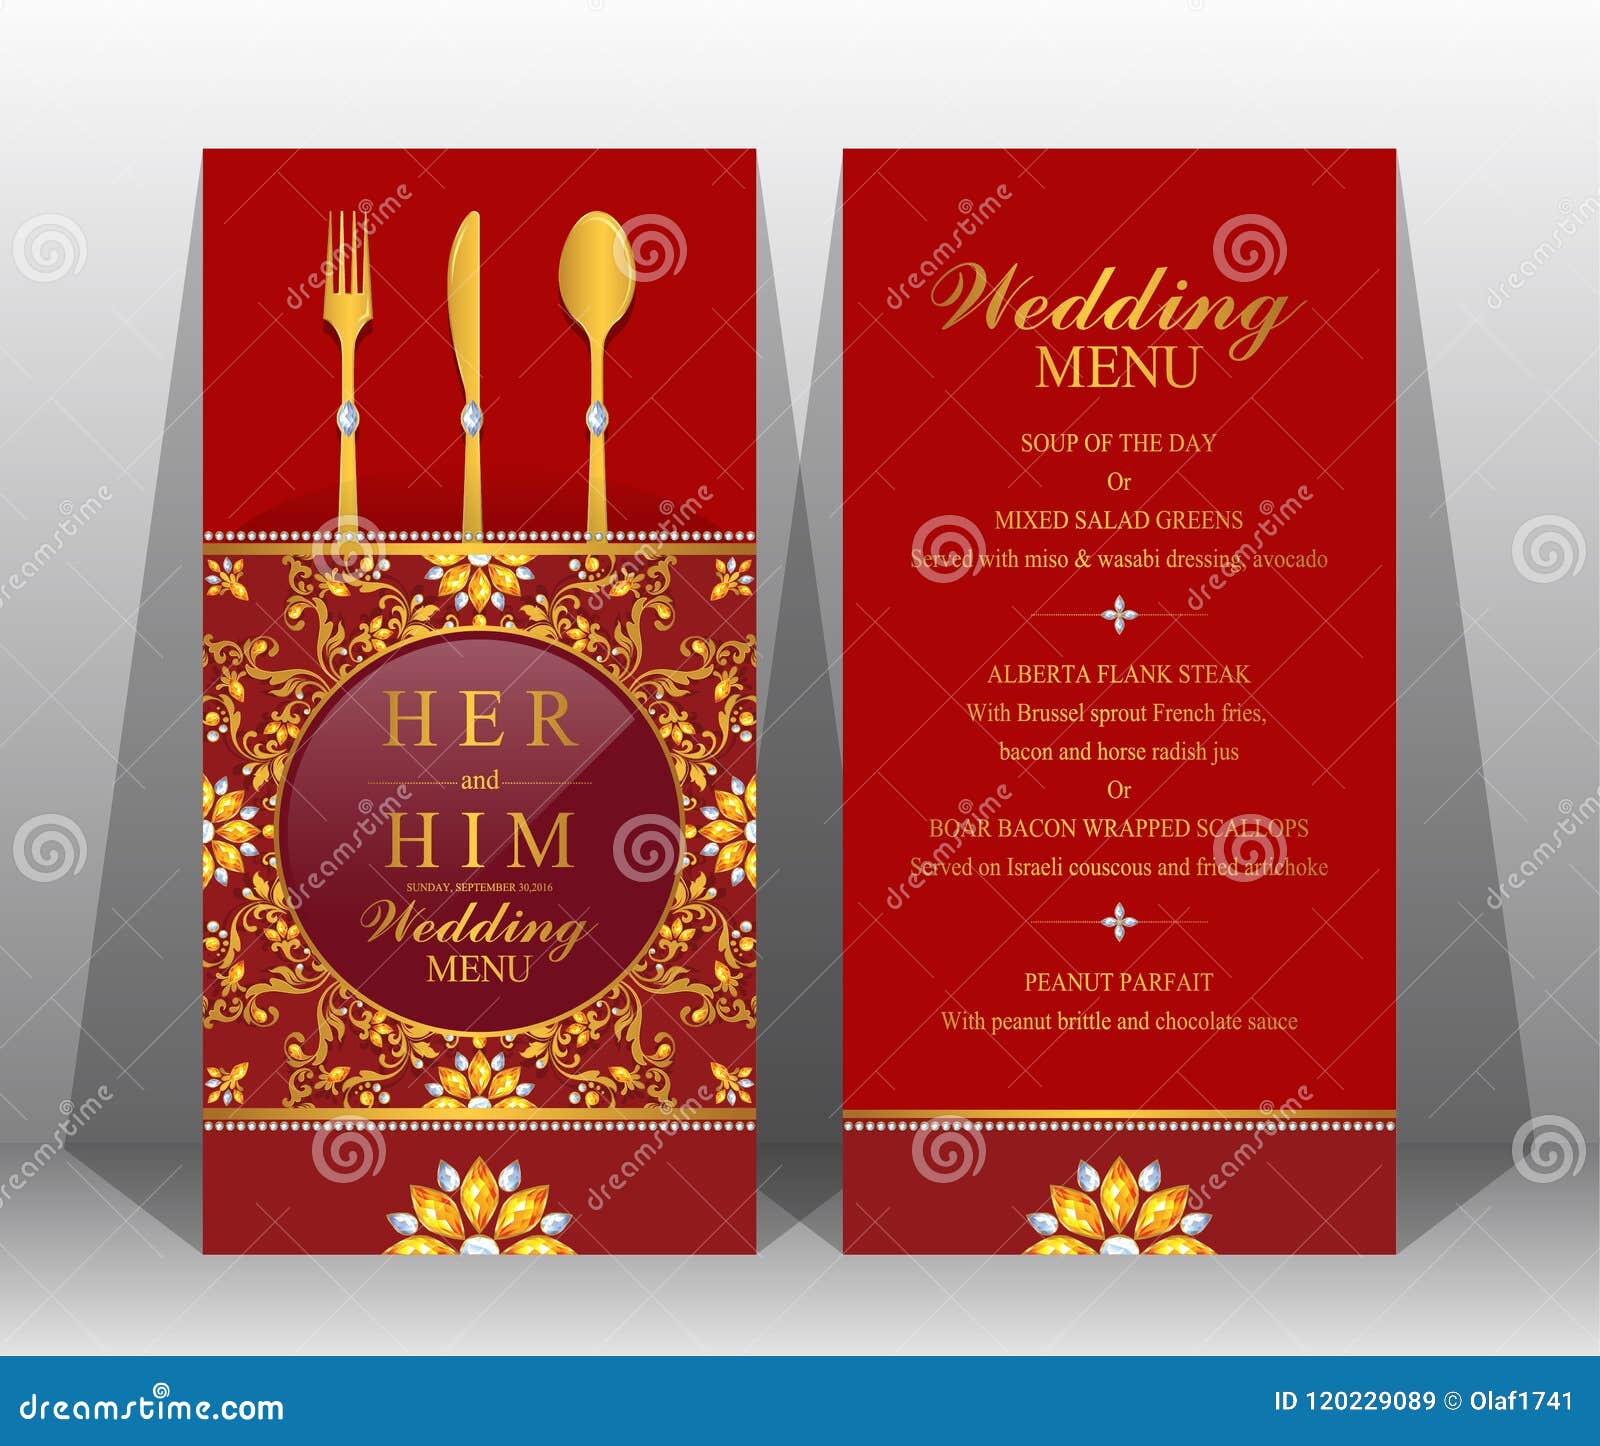 Wedding Menu Card Templates . Stock Vector - Illustration of With Wedding Menu Templates Free Download